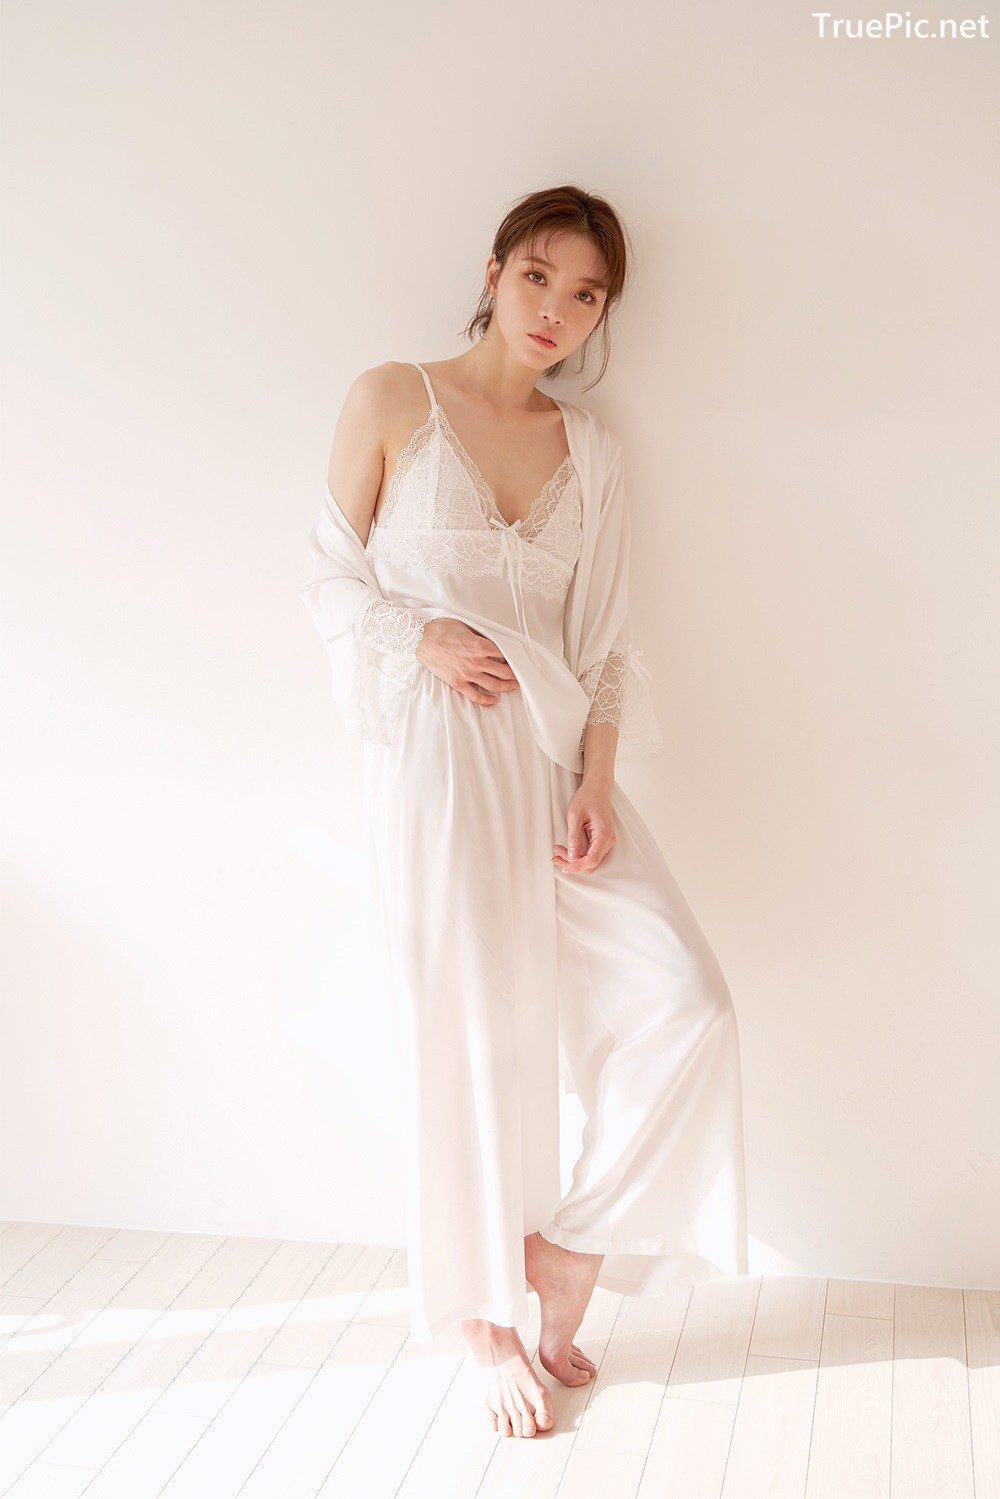 Image Korean Fashion Model Lee Ho Sin - Lingerie Wedding Pure - TruePic.net - Picture-86